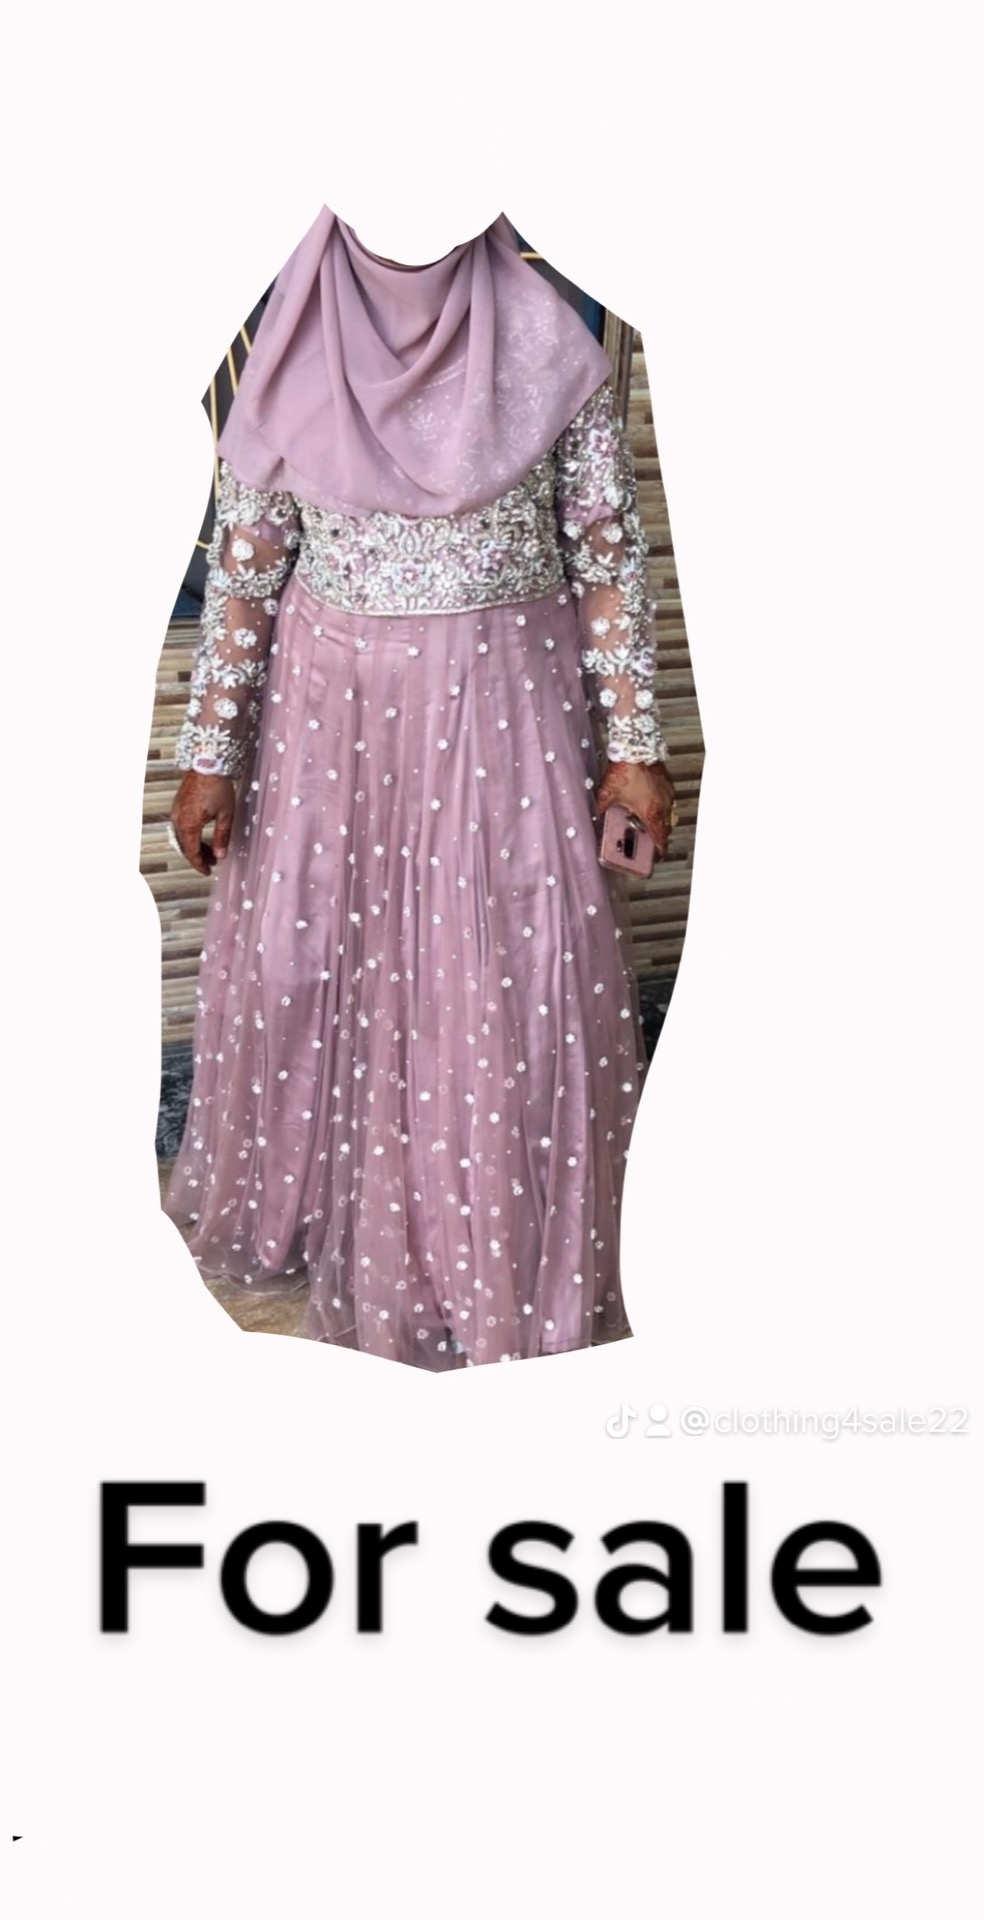 Lilac dress for wedding